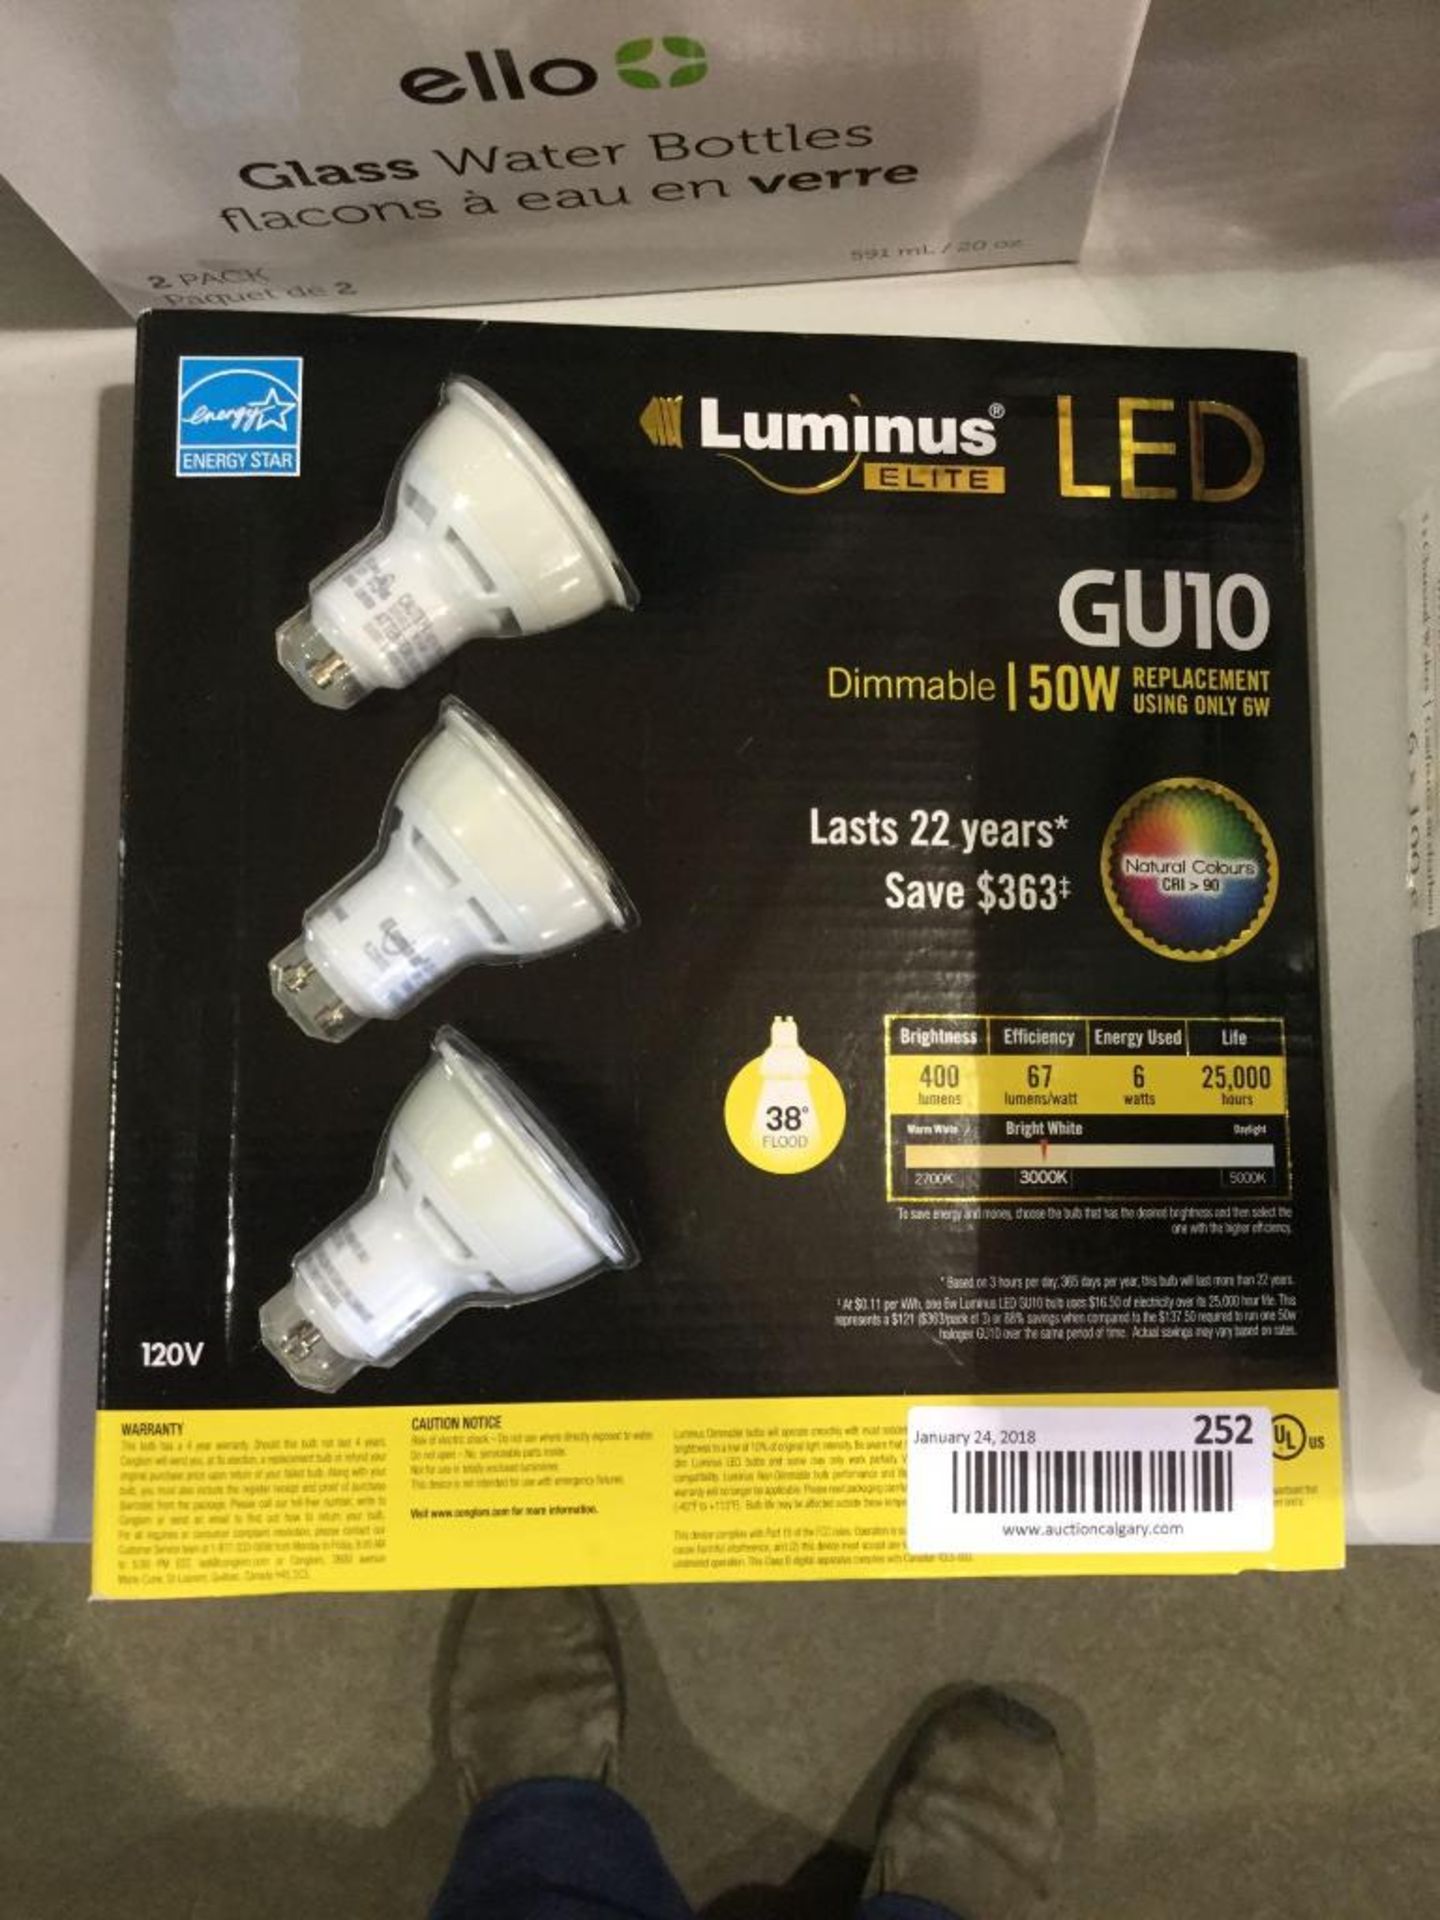 Luminus LED GU10 Dimmable 50 Watt Replacement Light Bulbs uses only 6 Watts